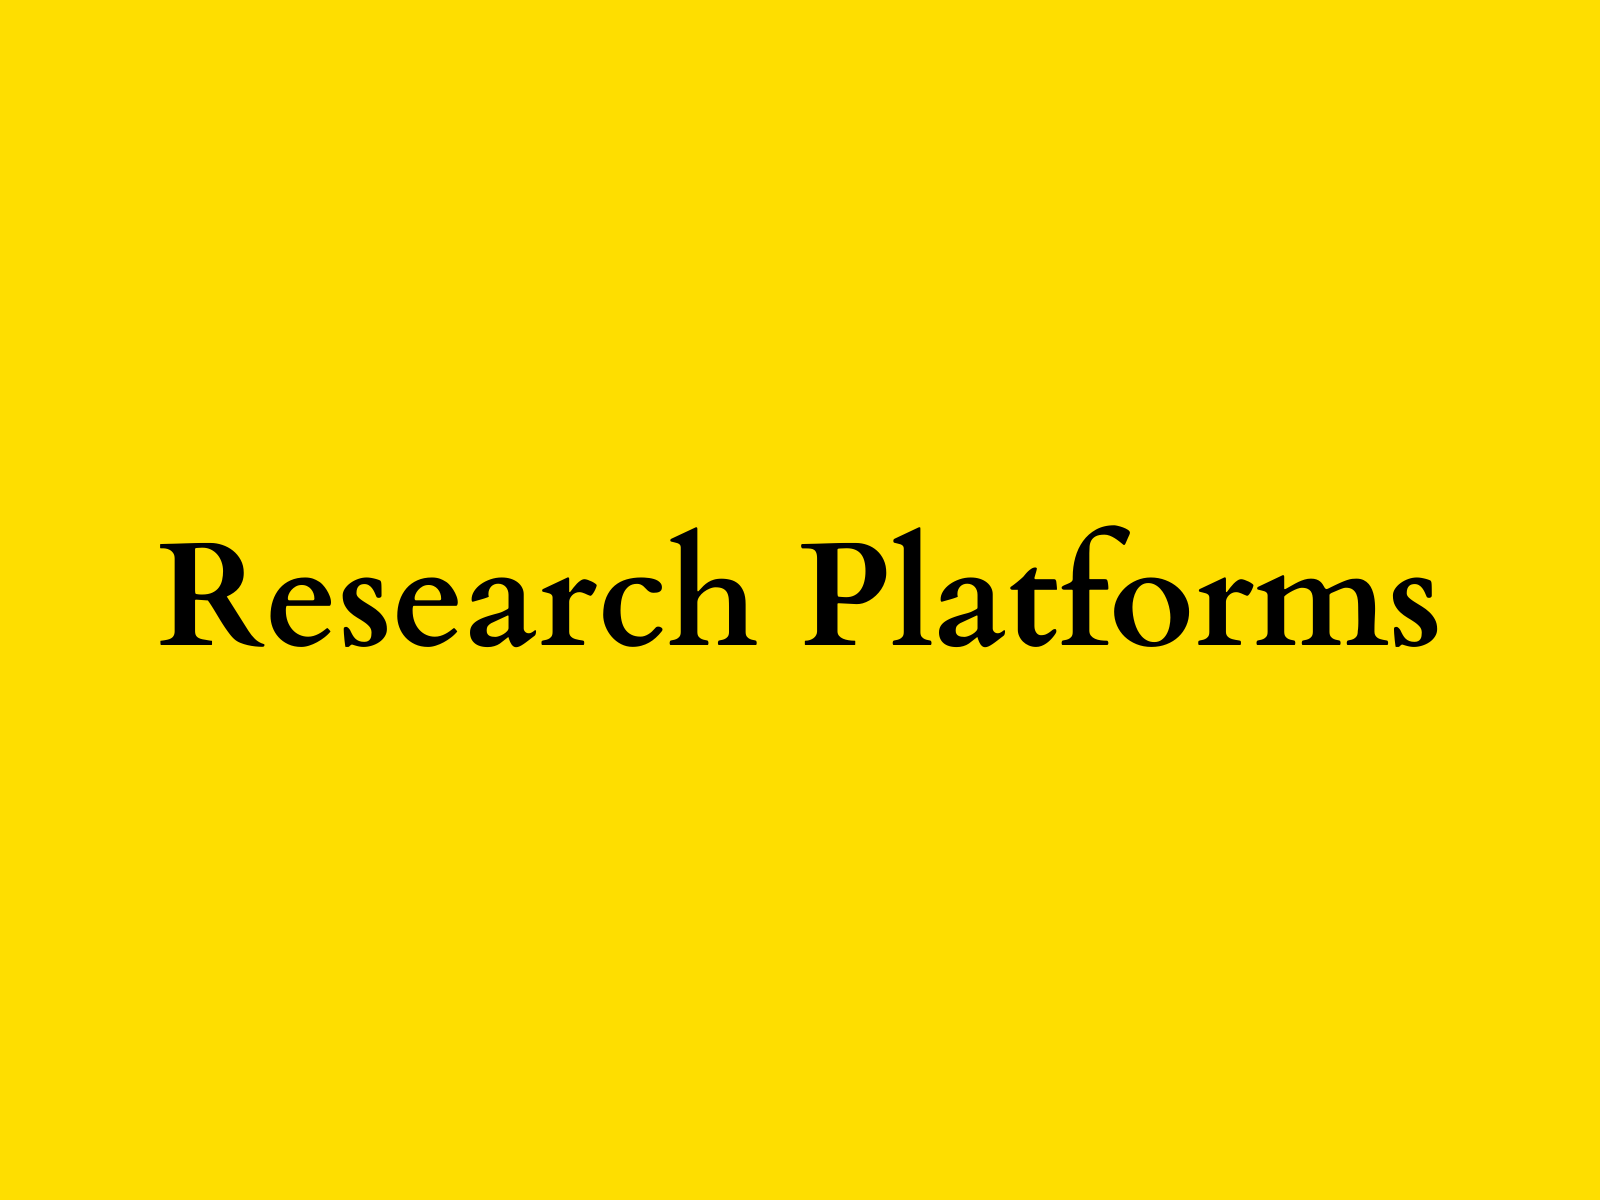 Research Platforms